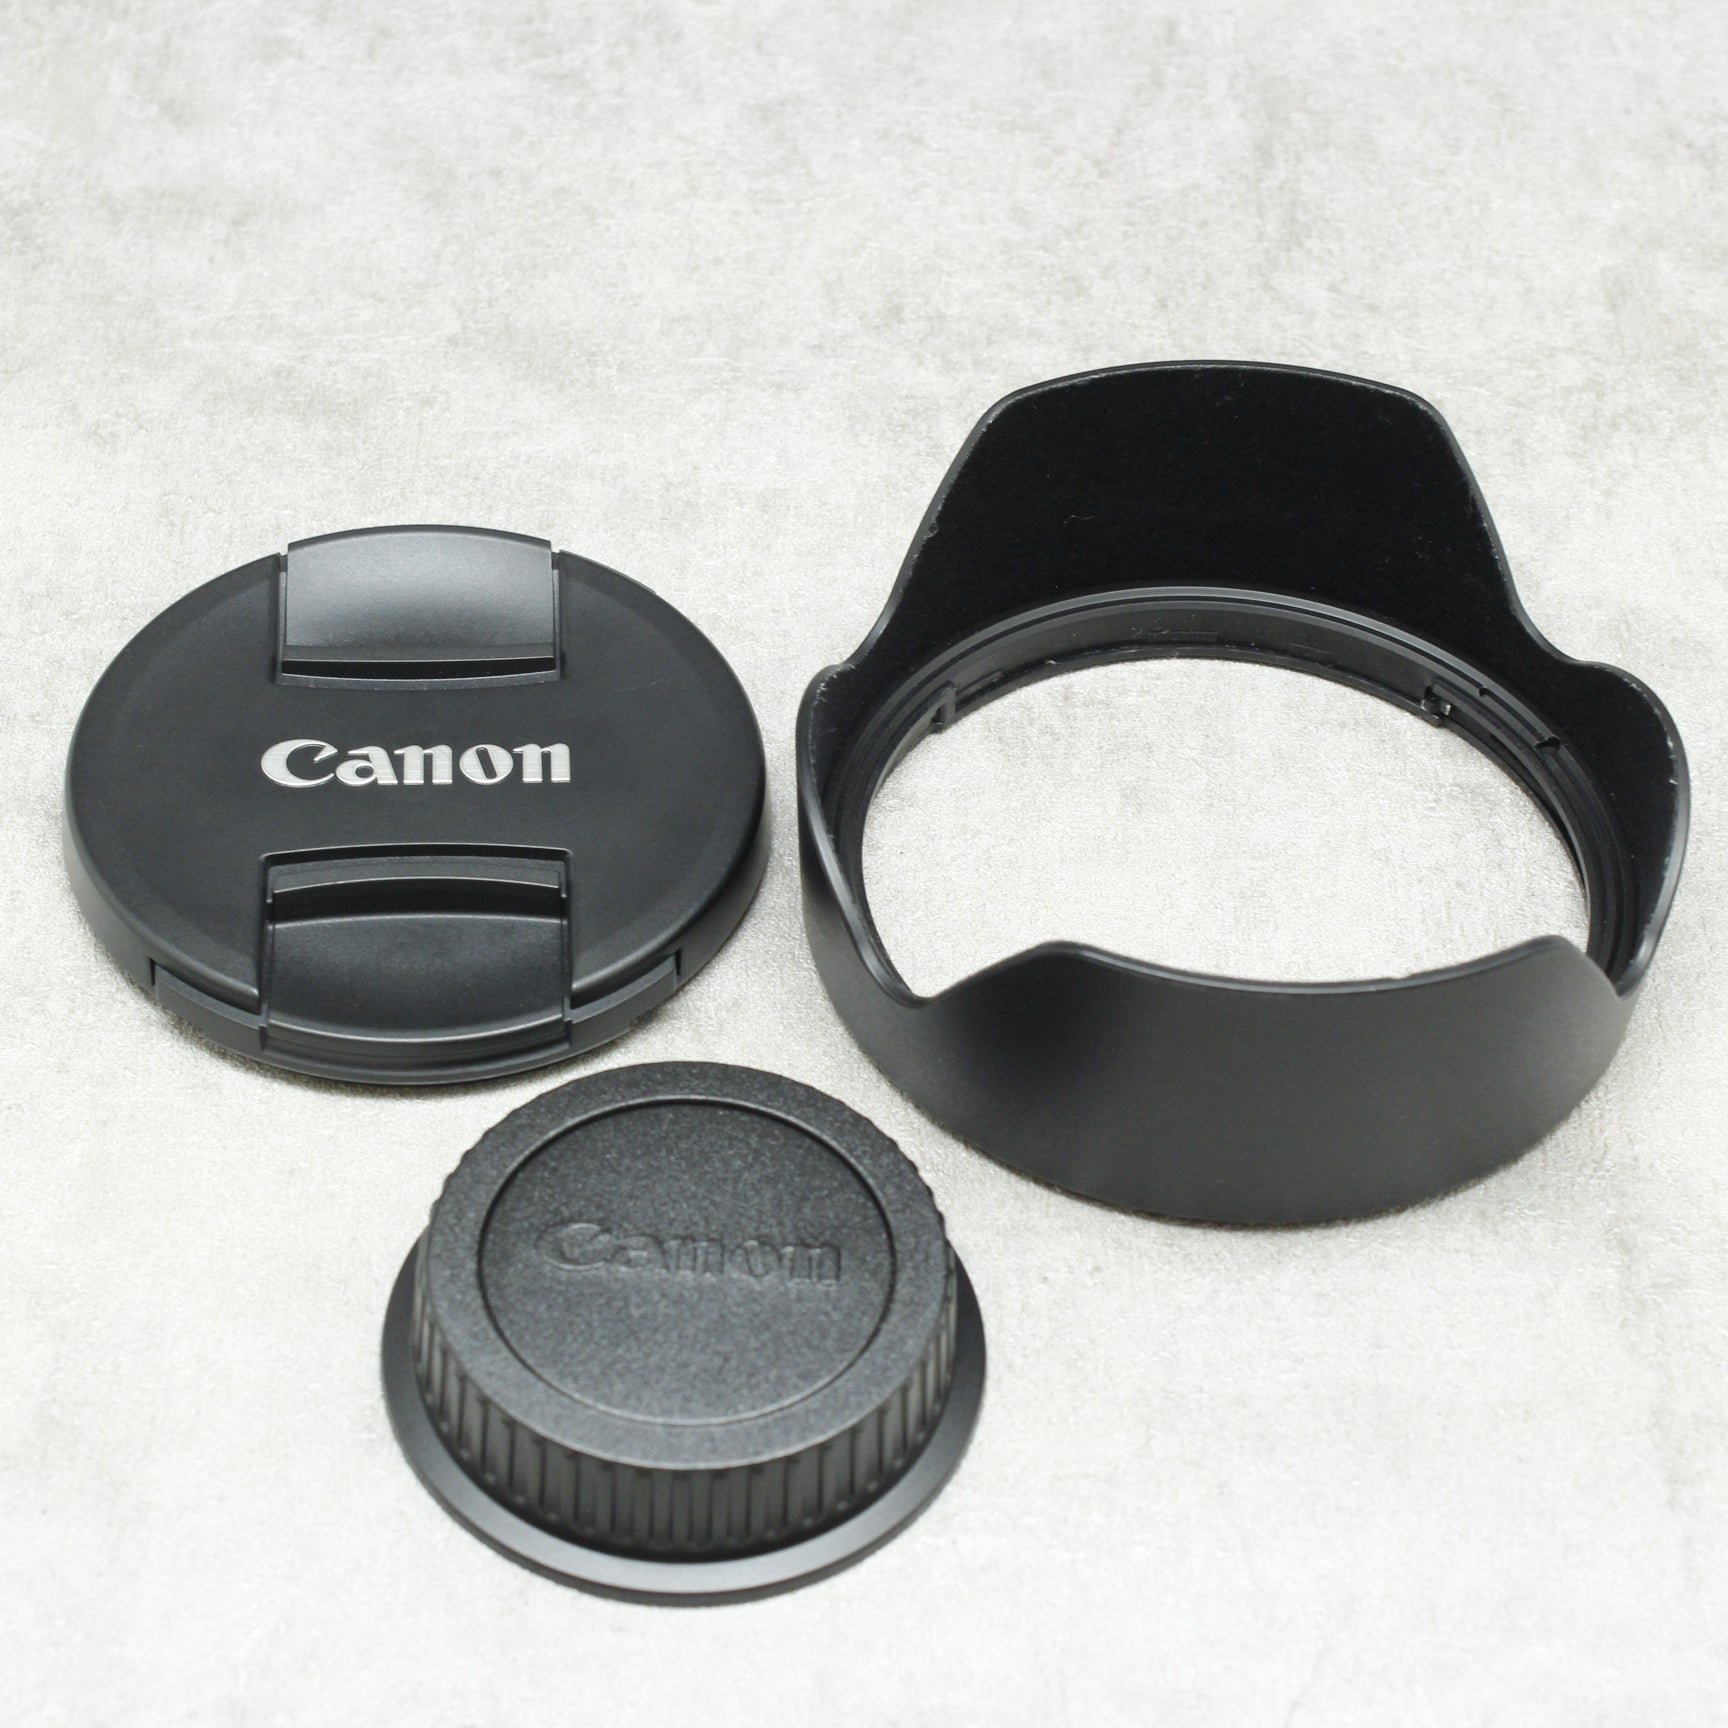 中古品 Canon EF 24-70mm F2.8L II USM【6月20日(火)のYouTube生配信でご紹介】